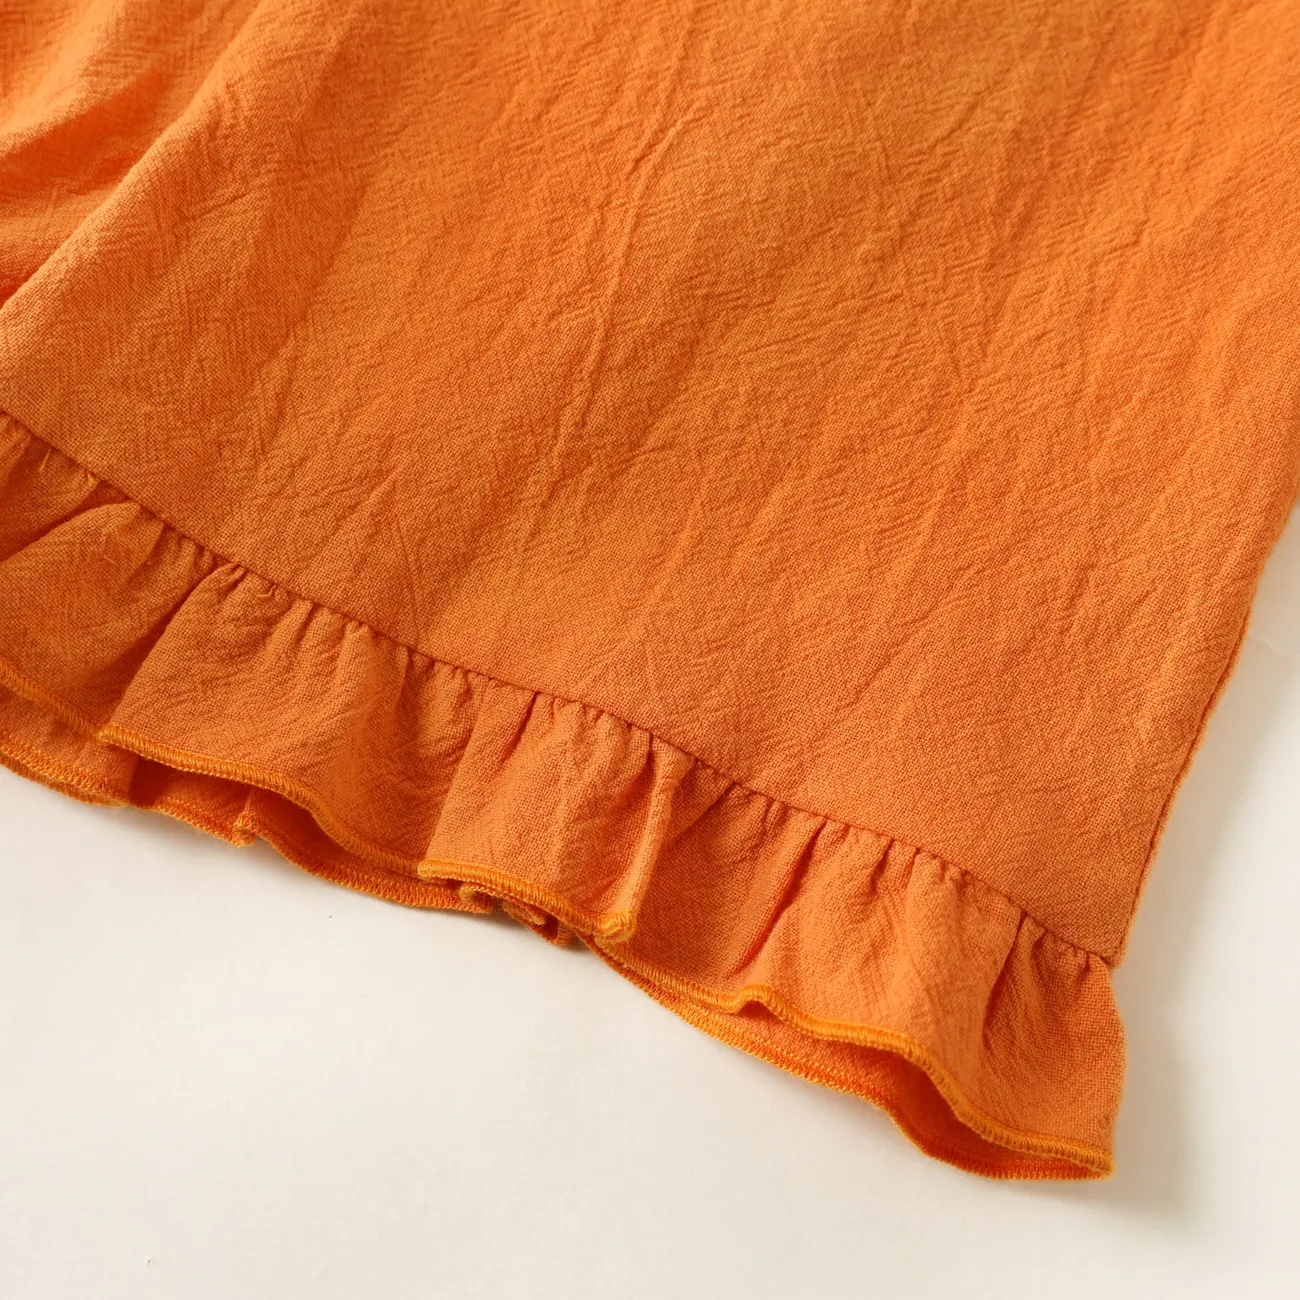 Toddler Girl Floral Print/Stripe/Orange Button Design Ruffled Cuff Bowknot Strap Romper Jumpsuit Shorts Orange big image 1